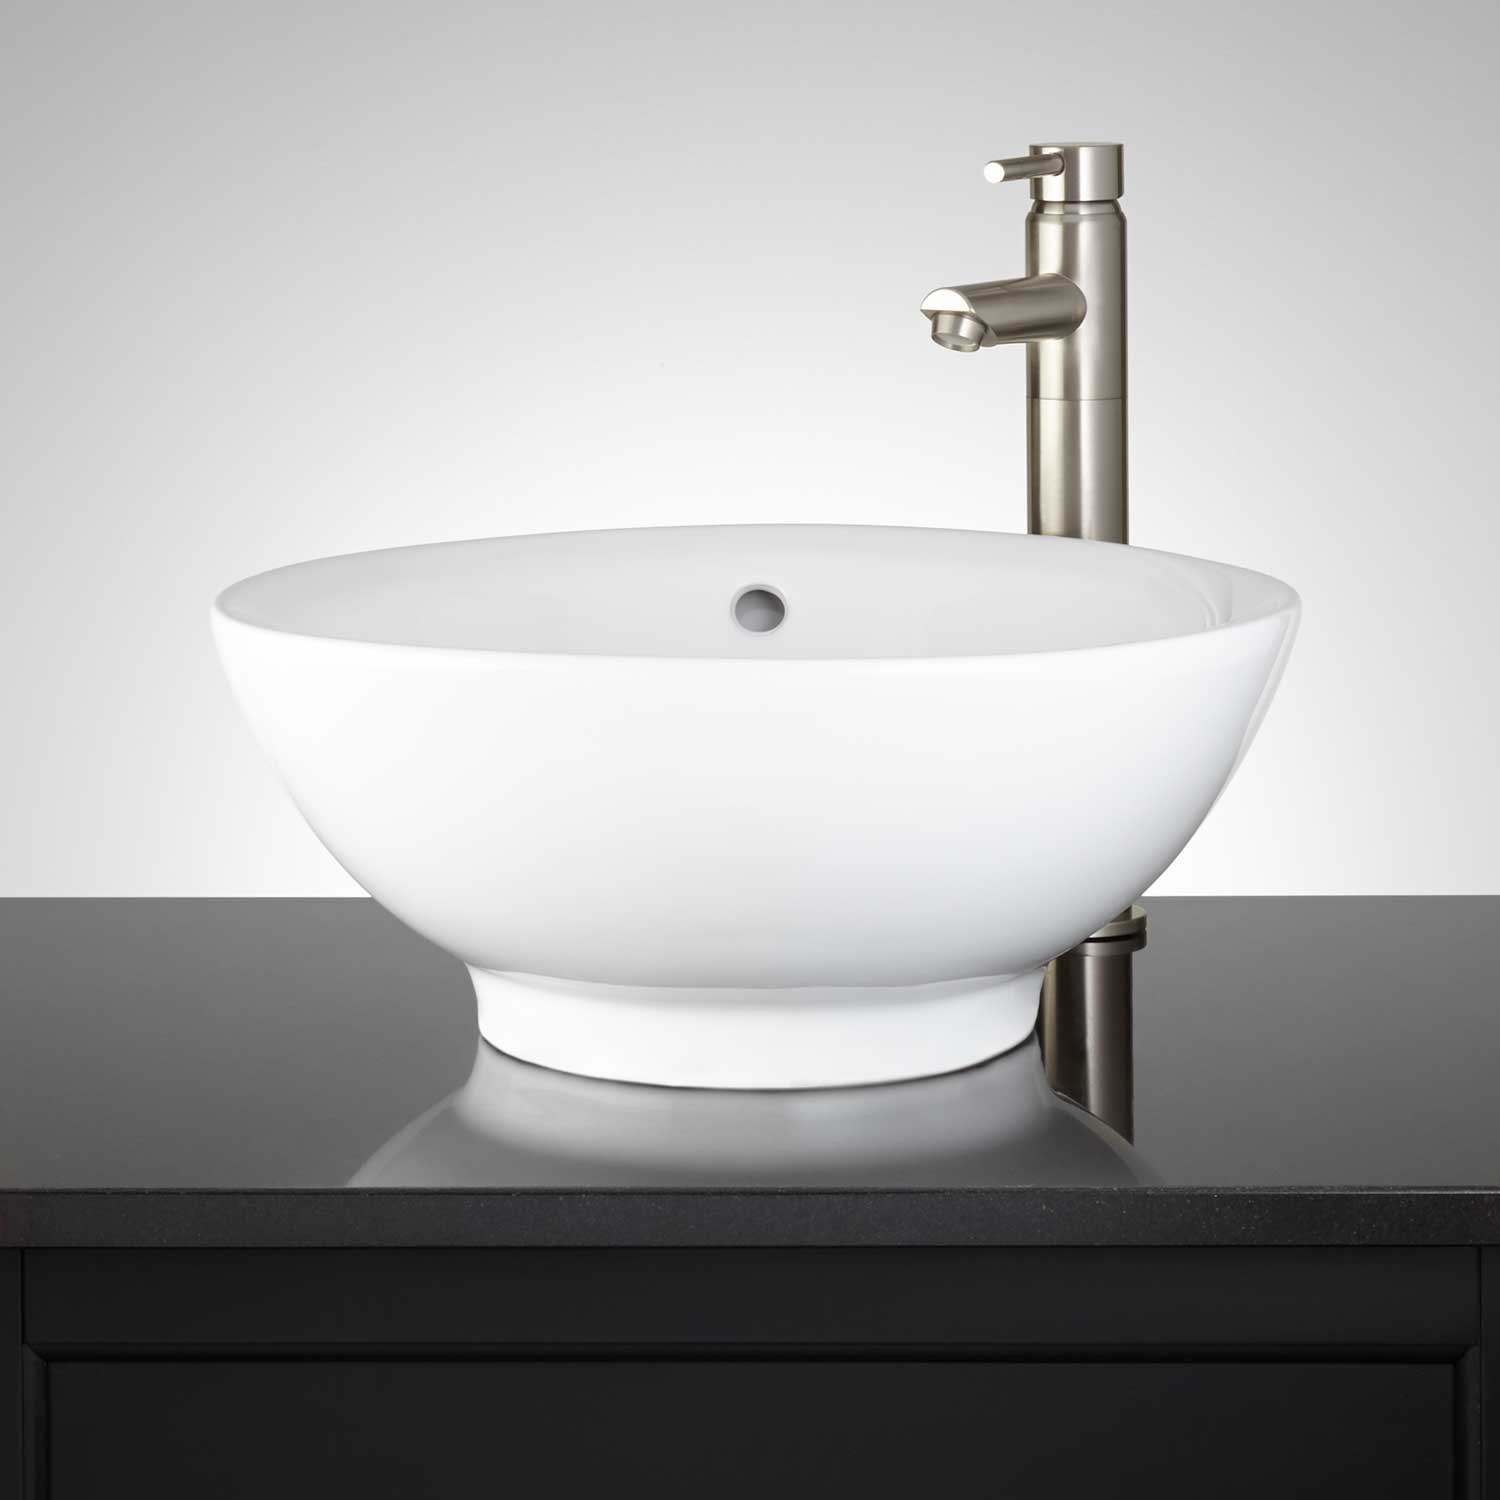 Best ideas about Vessel Bathroom Sinks
. Save or Pin Kasdy Round Porcelain Vessel Sink Vessel Sinks Now.